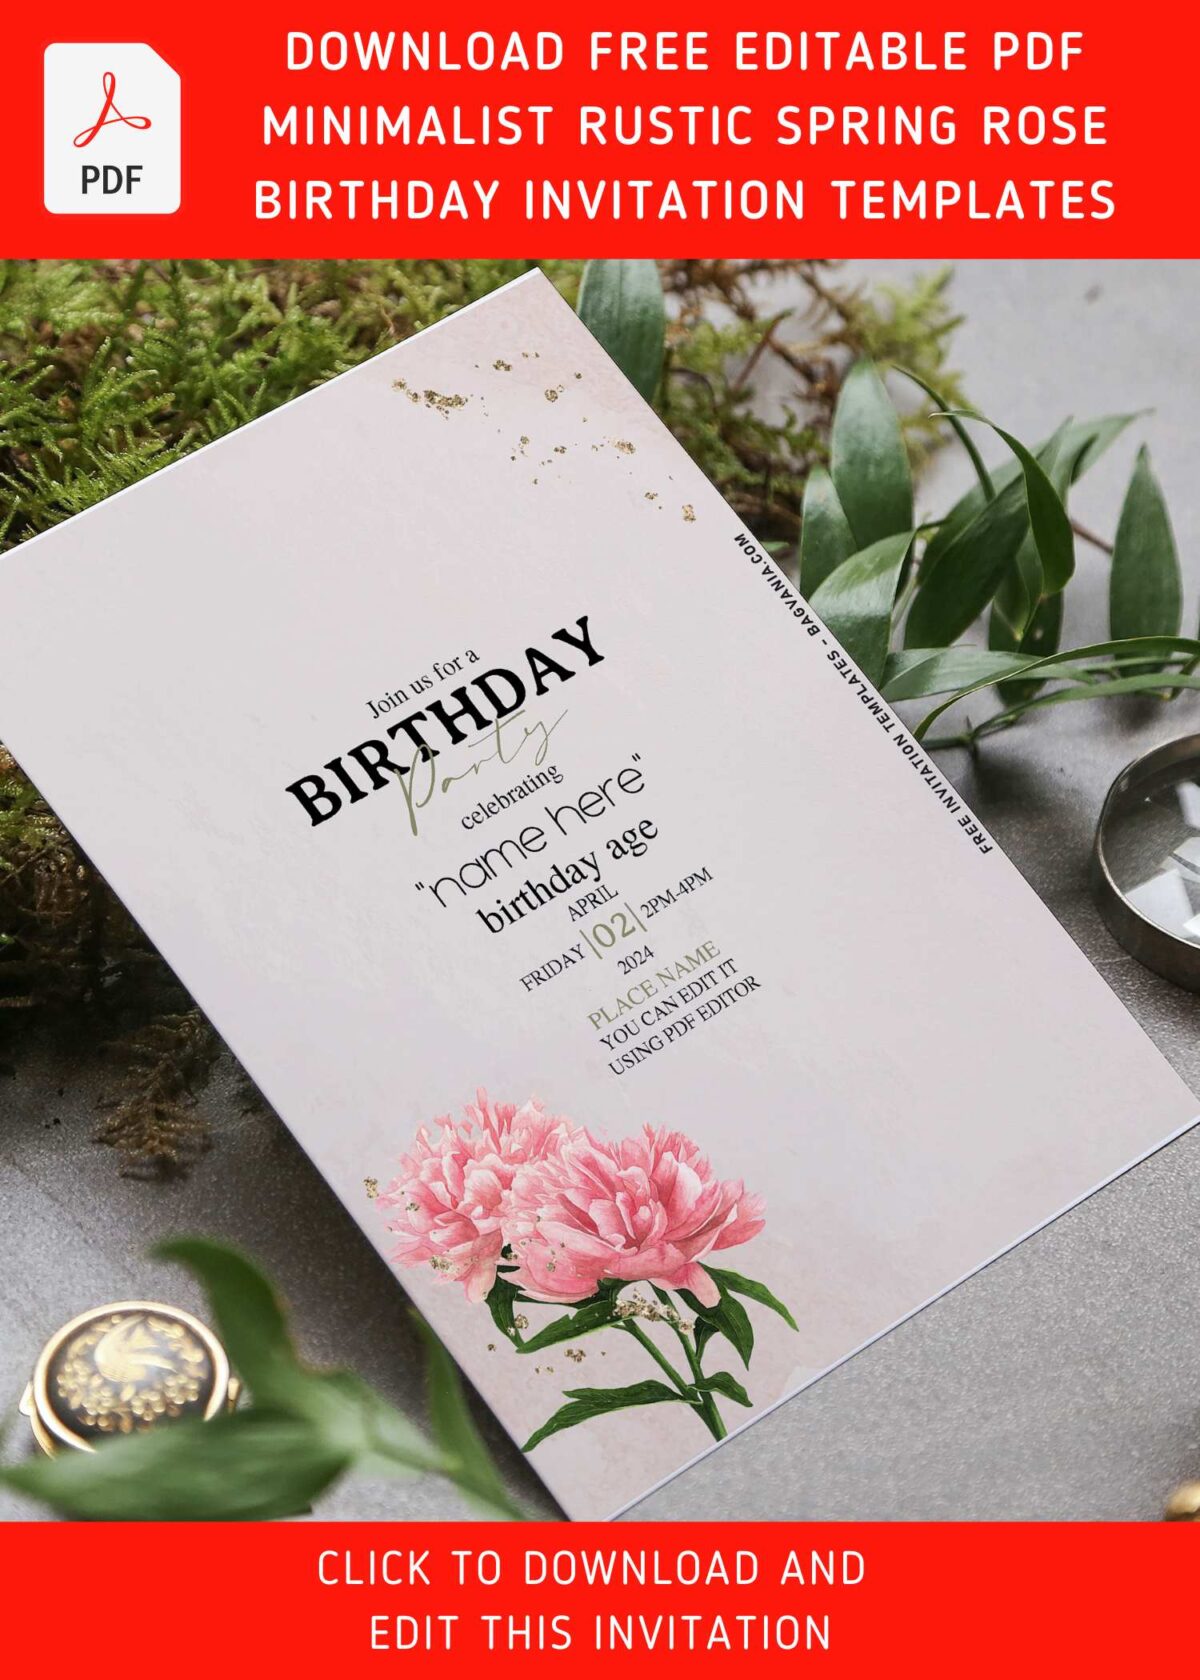 (Free Editable PDF) Minimalist Spring Rose And Peony Birthday Invitation Templates with Watercolor Peonies